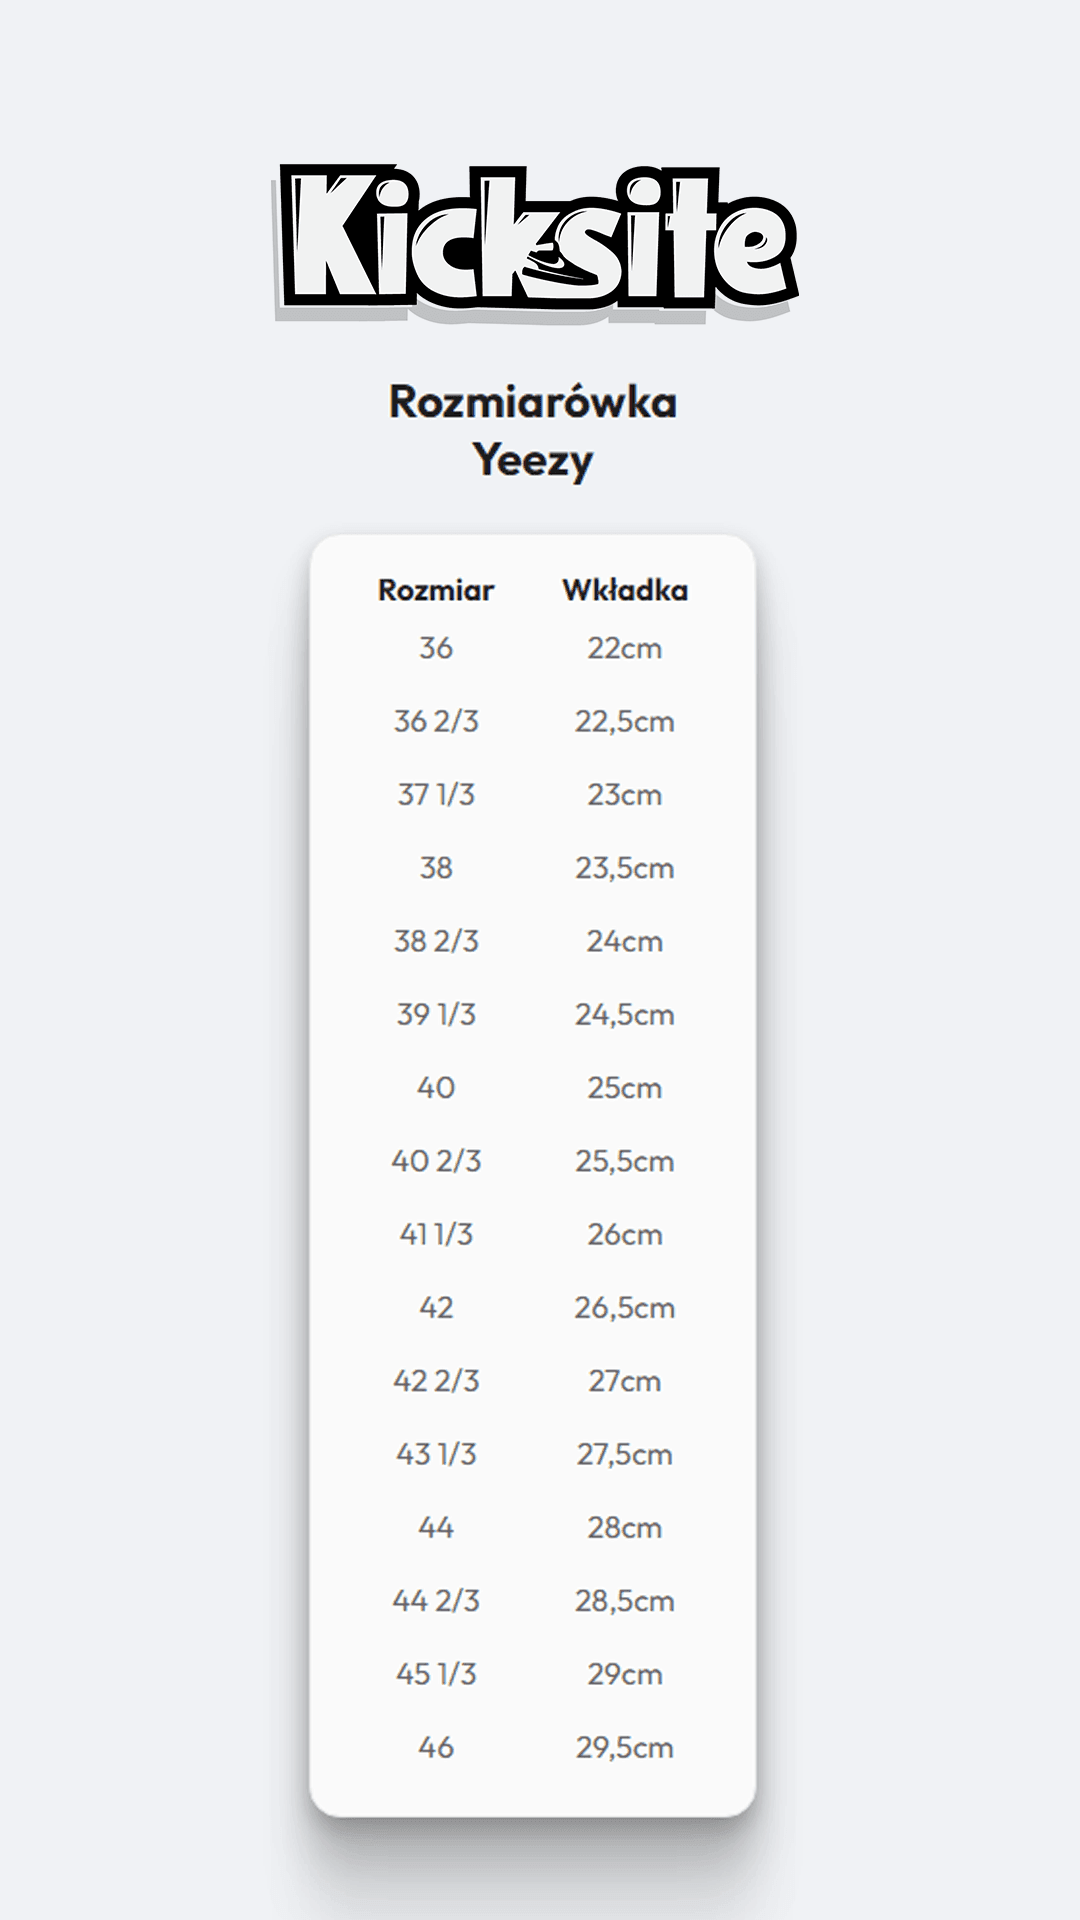 yeezy - Kicksite